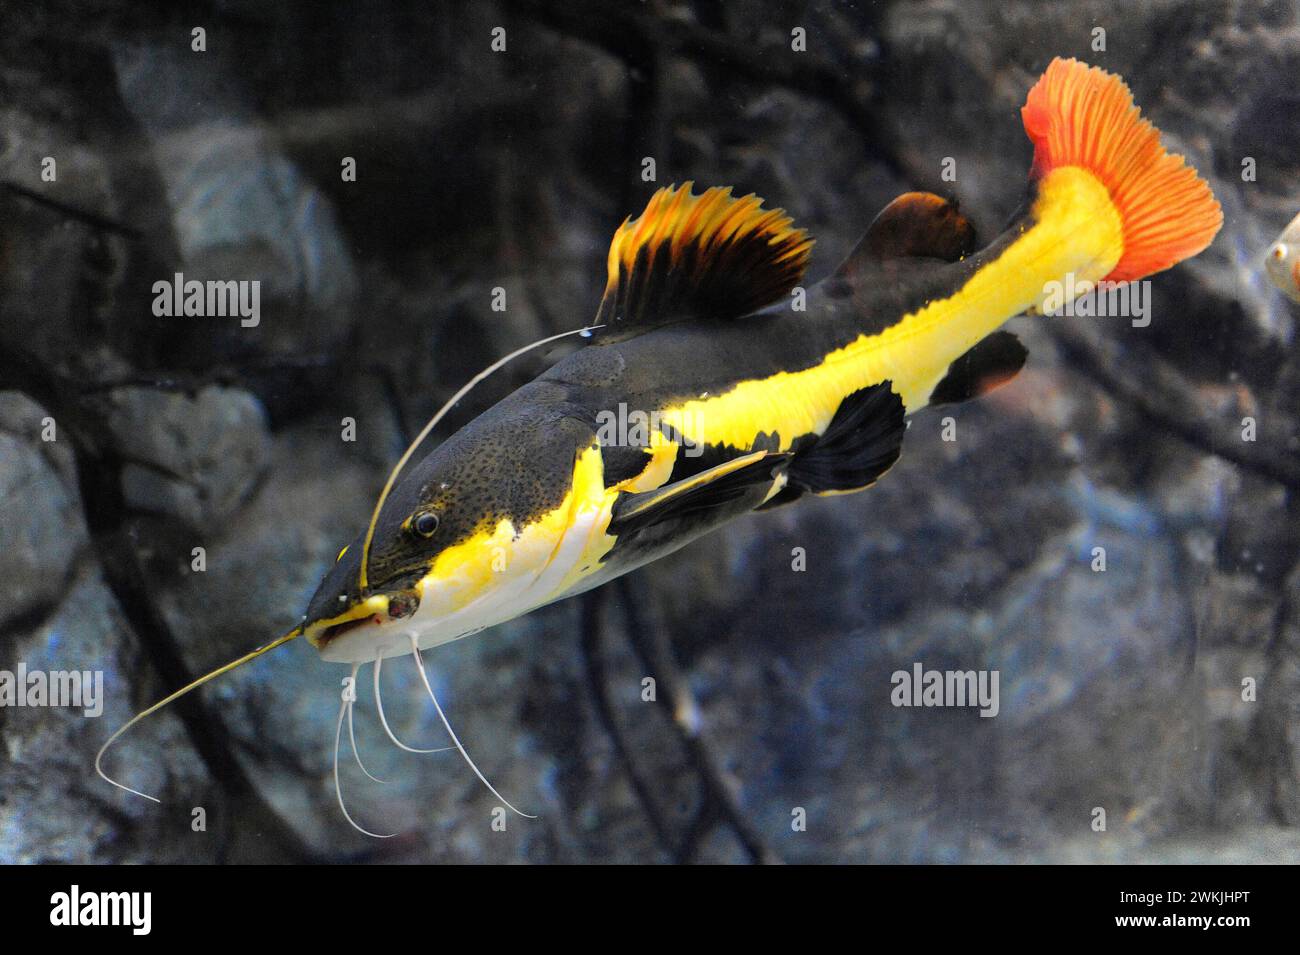 Redtail catfish (Phractocephalus hemioliopterus) is a fresh water fish native to Amazon basin. Stock Photo